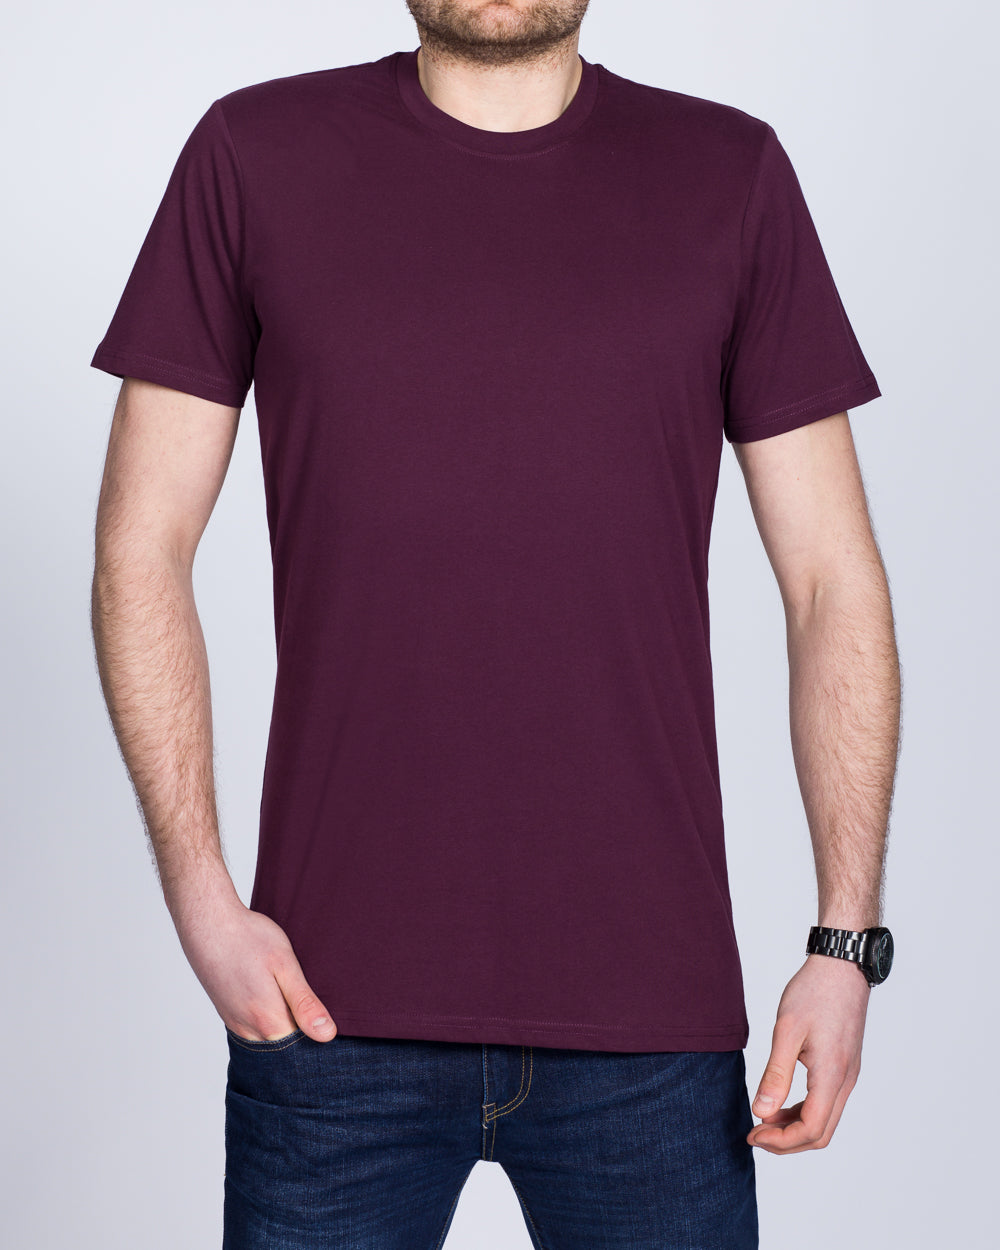 Girav Sydney Tall T-Shirt (bordeaux)